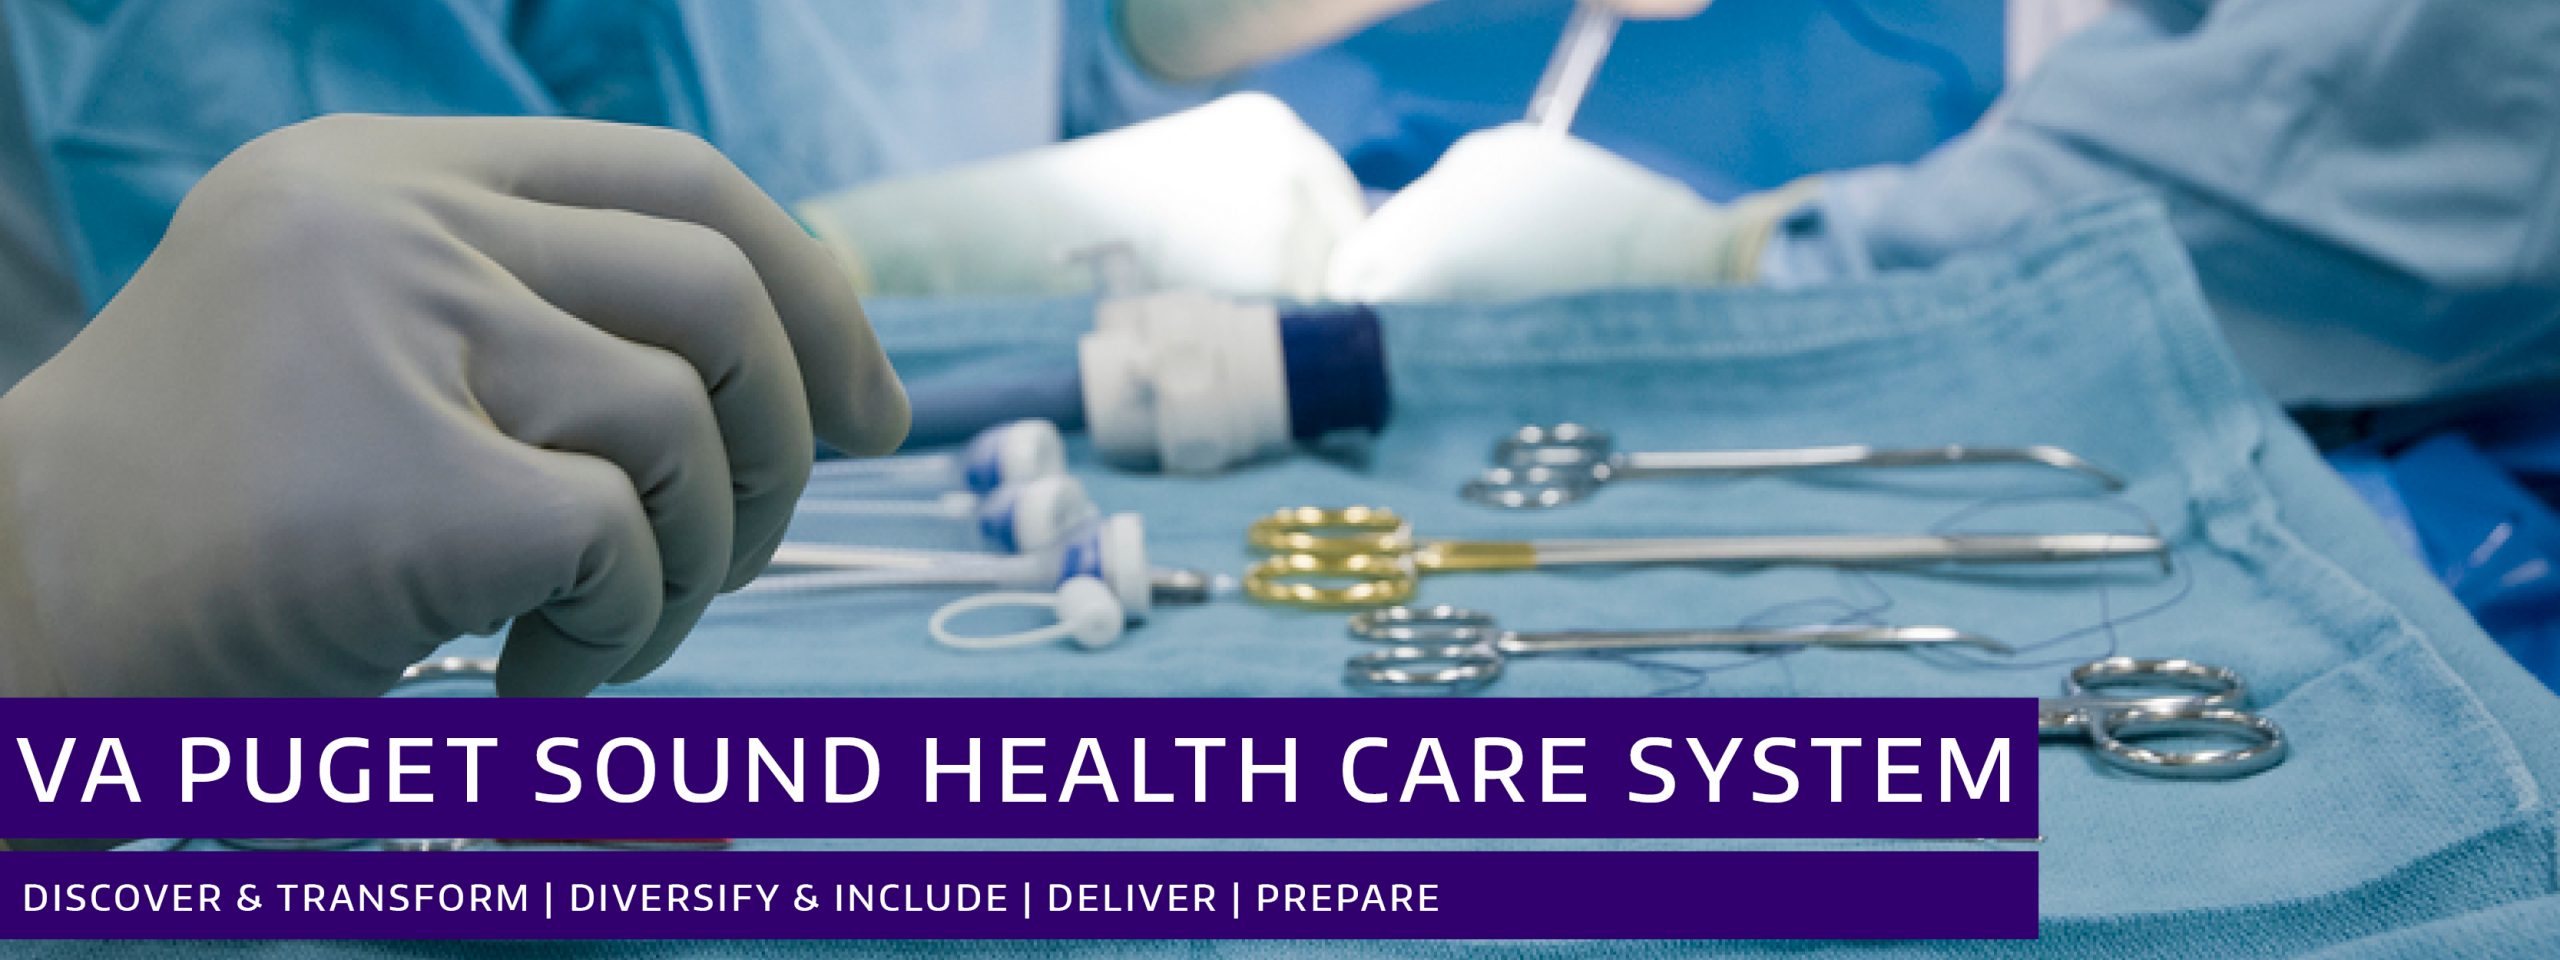 Department of Surgery VA Puget Sound Health Care System Header Image